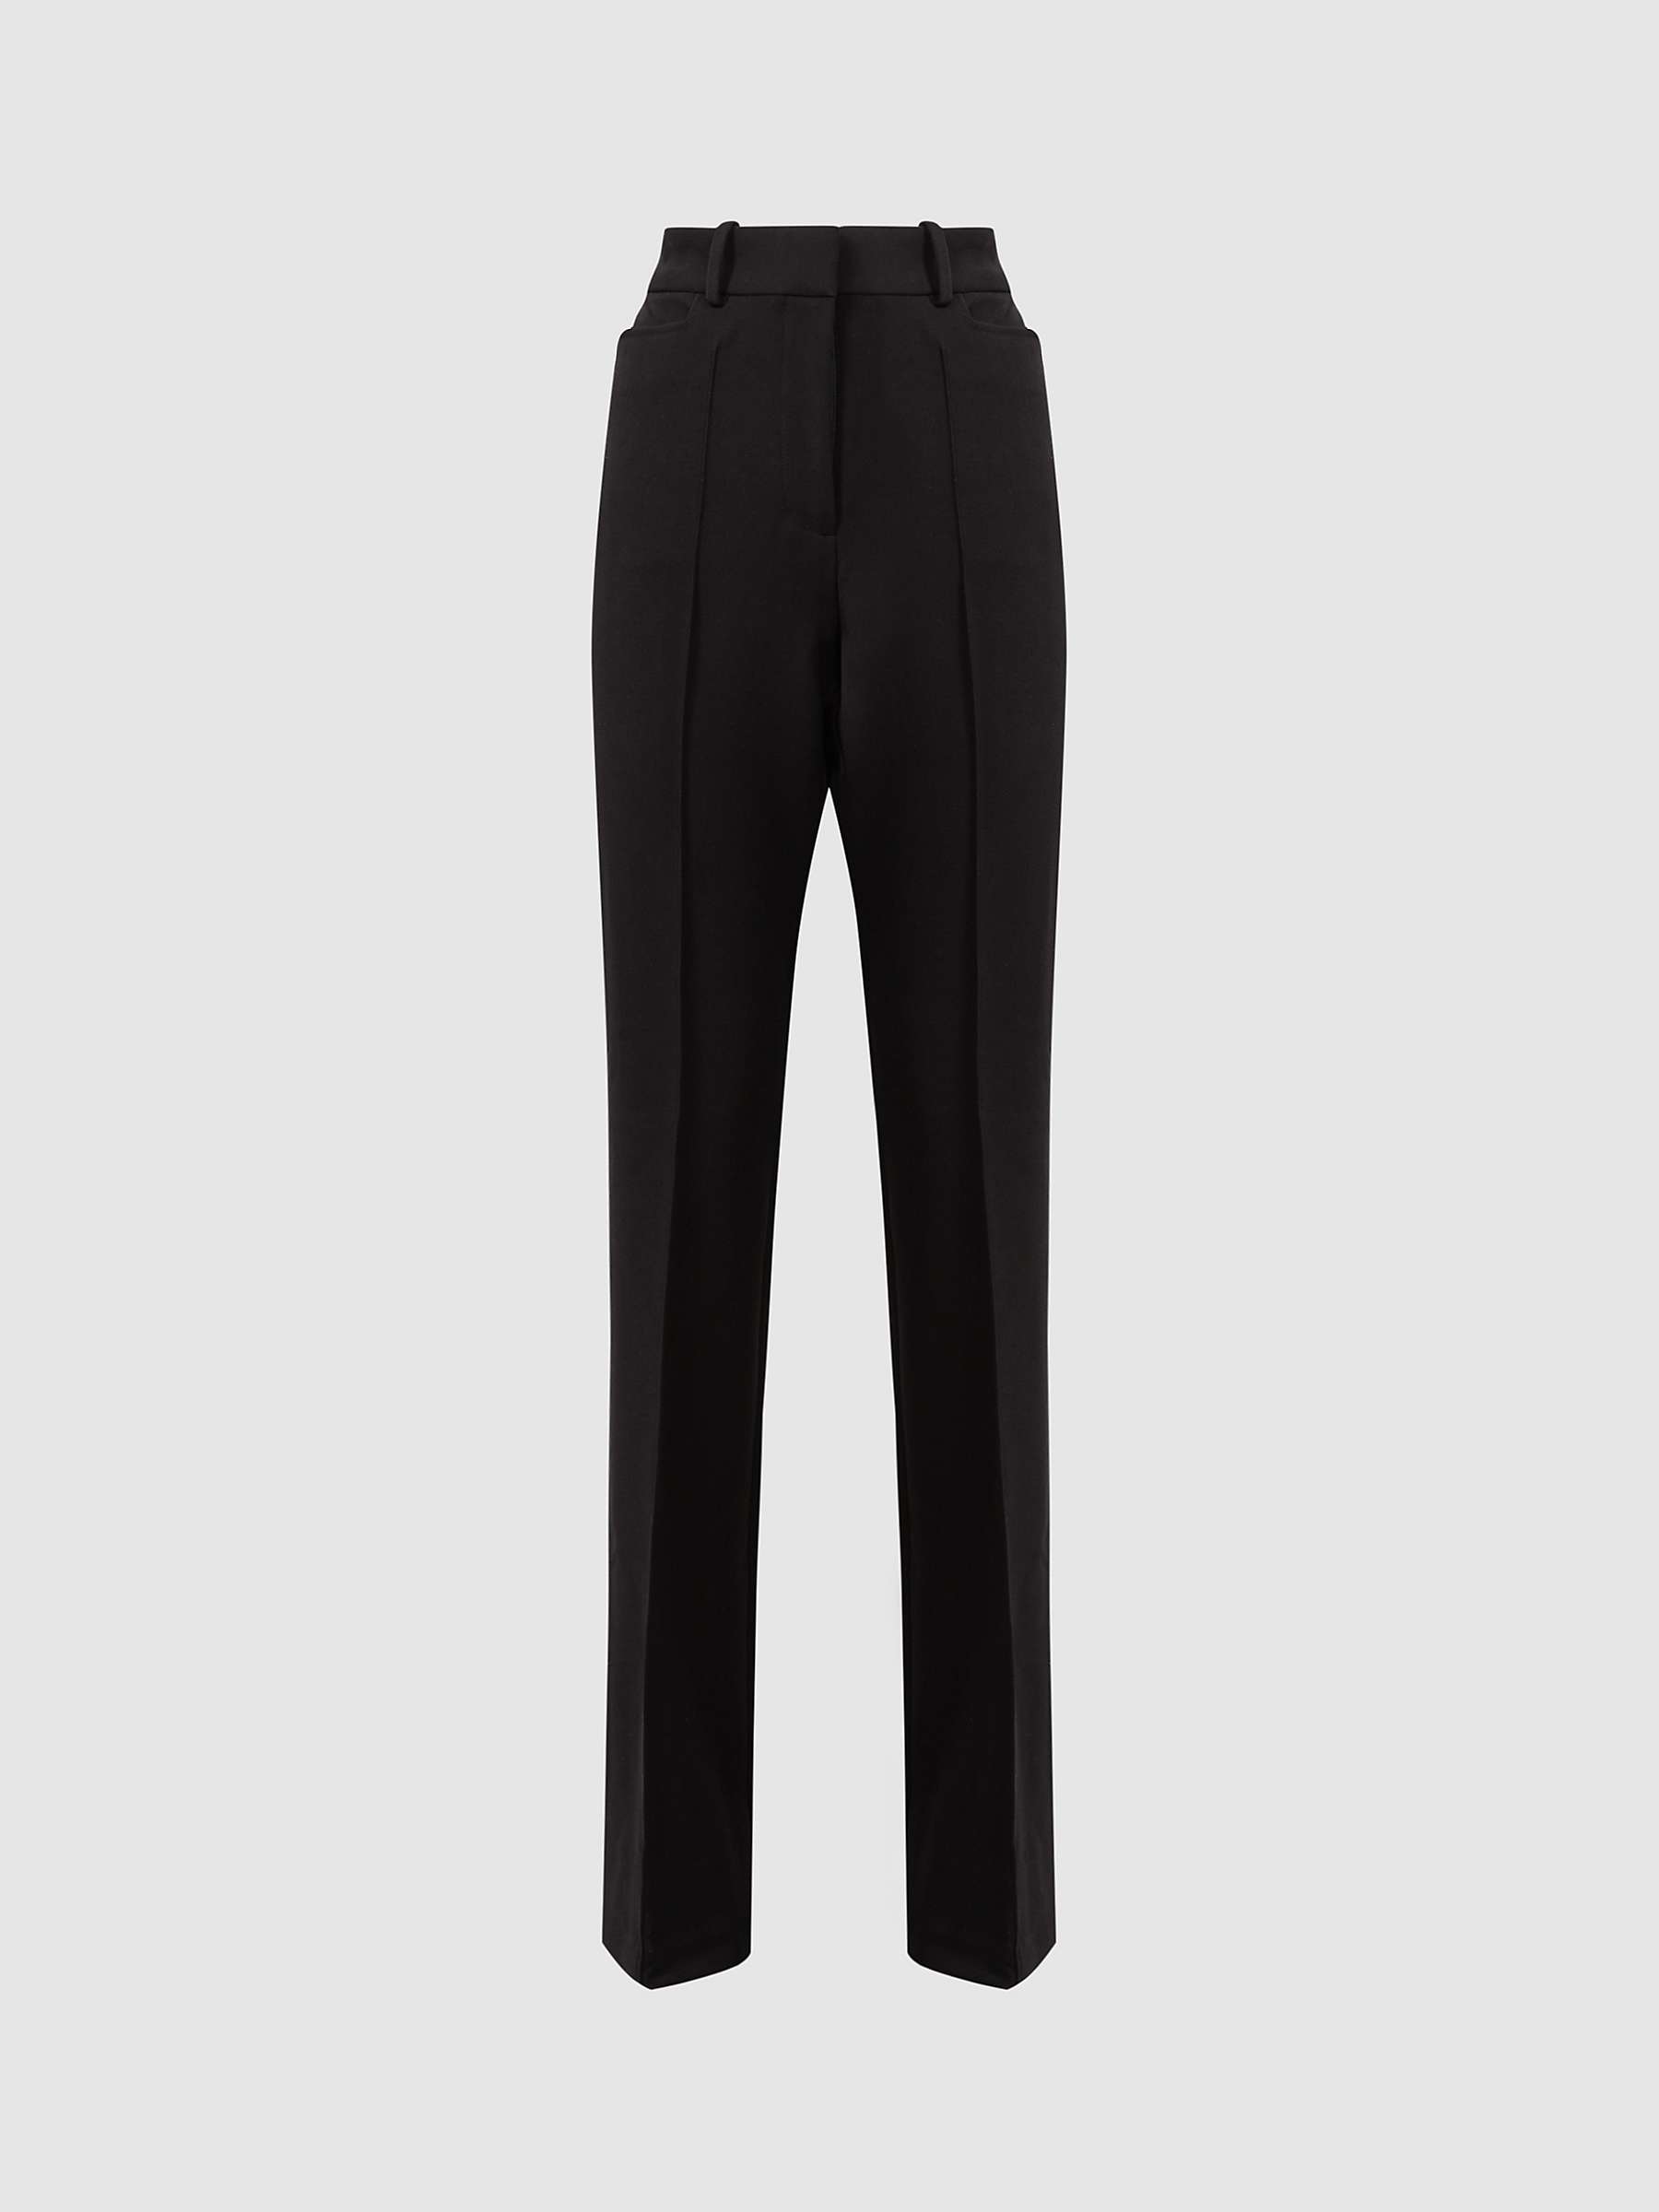 Reiss Gabi Slim Fit Tailored Suit Trousers, Black at John Lewis & Partners